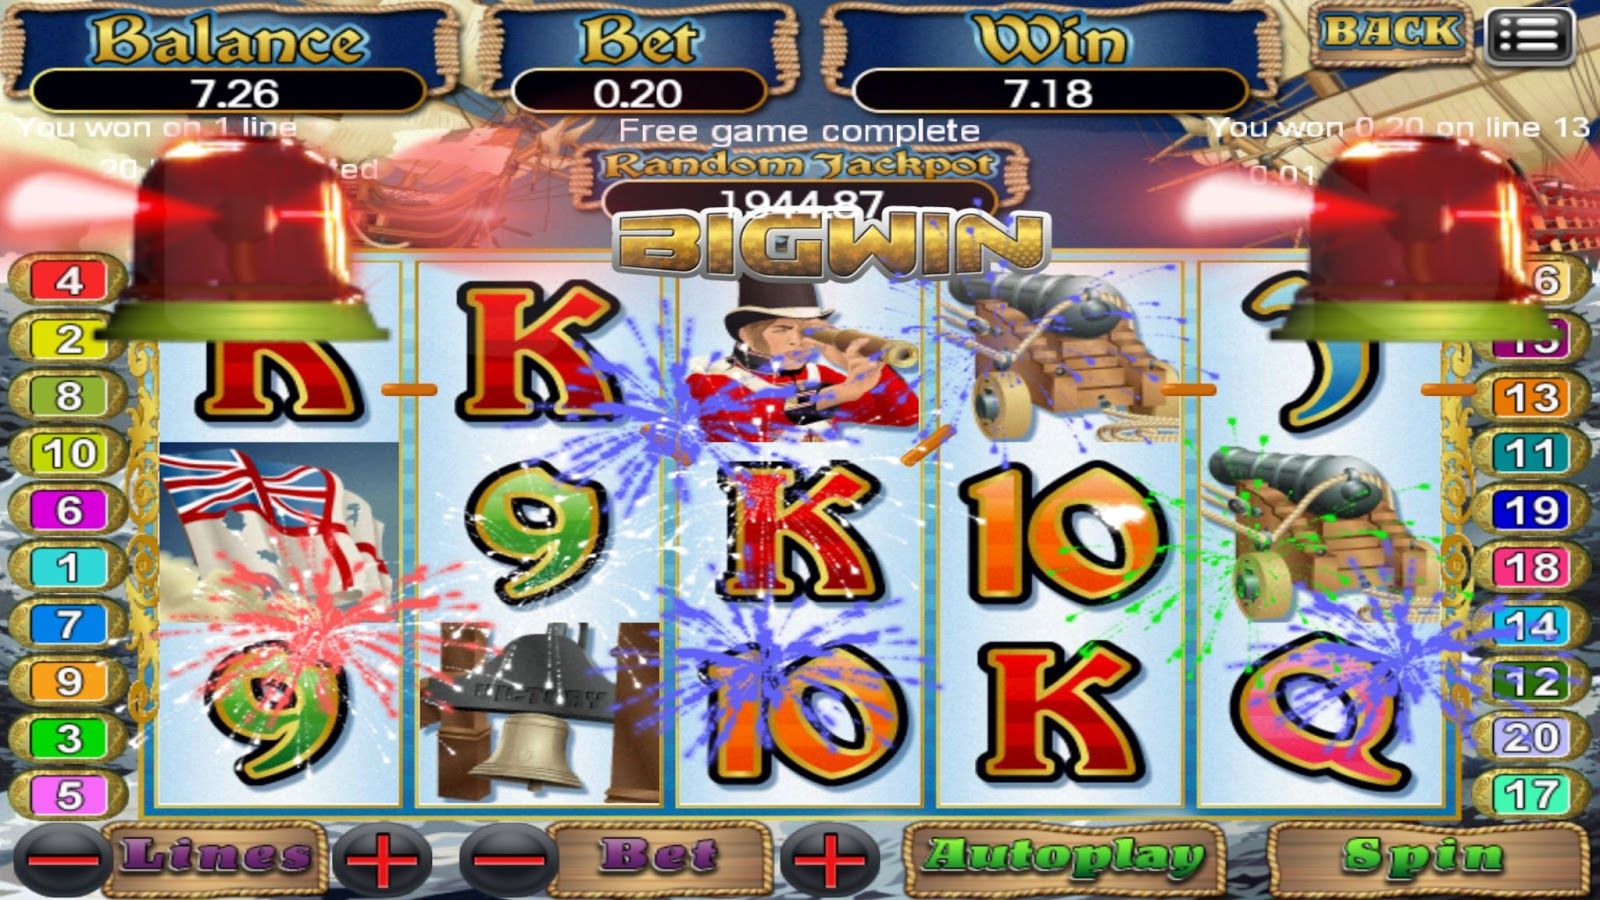 Victory slot machine screenshot